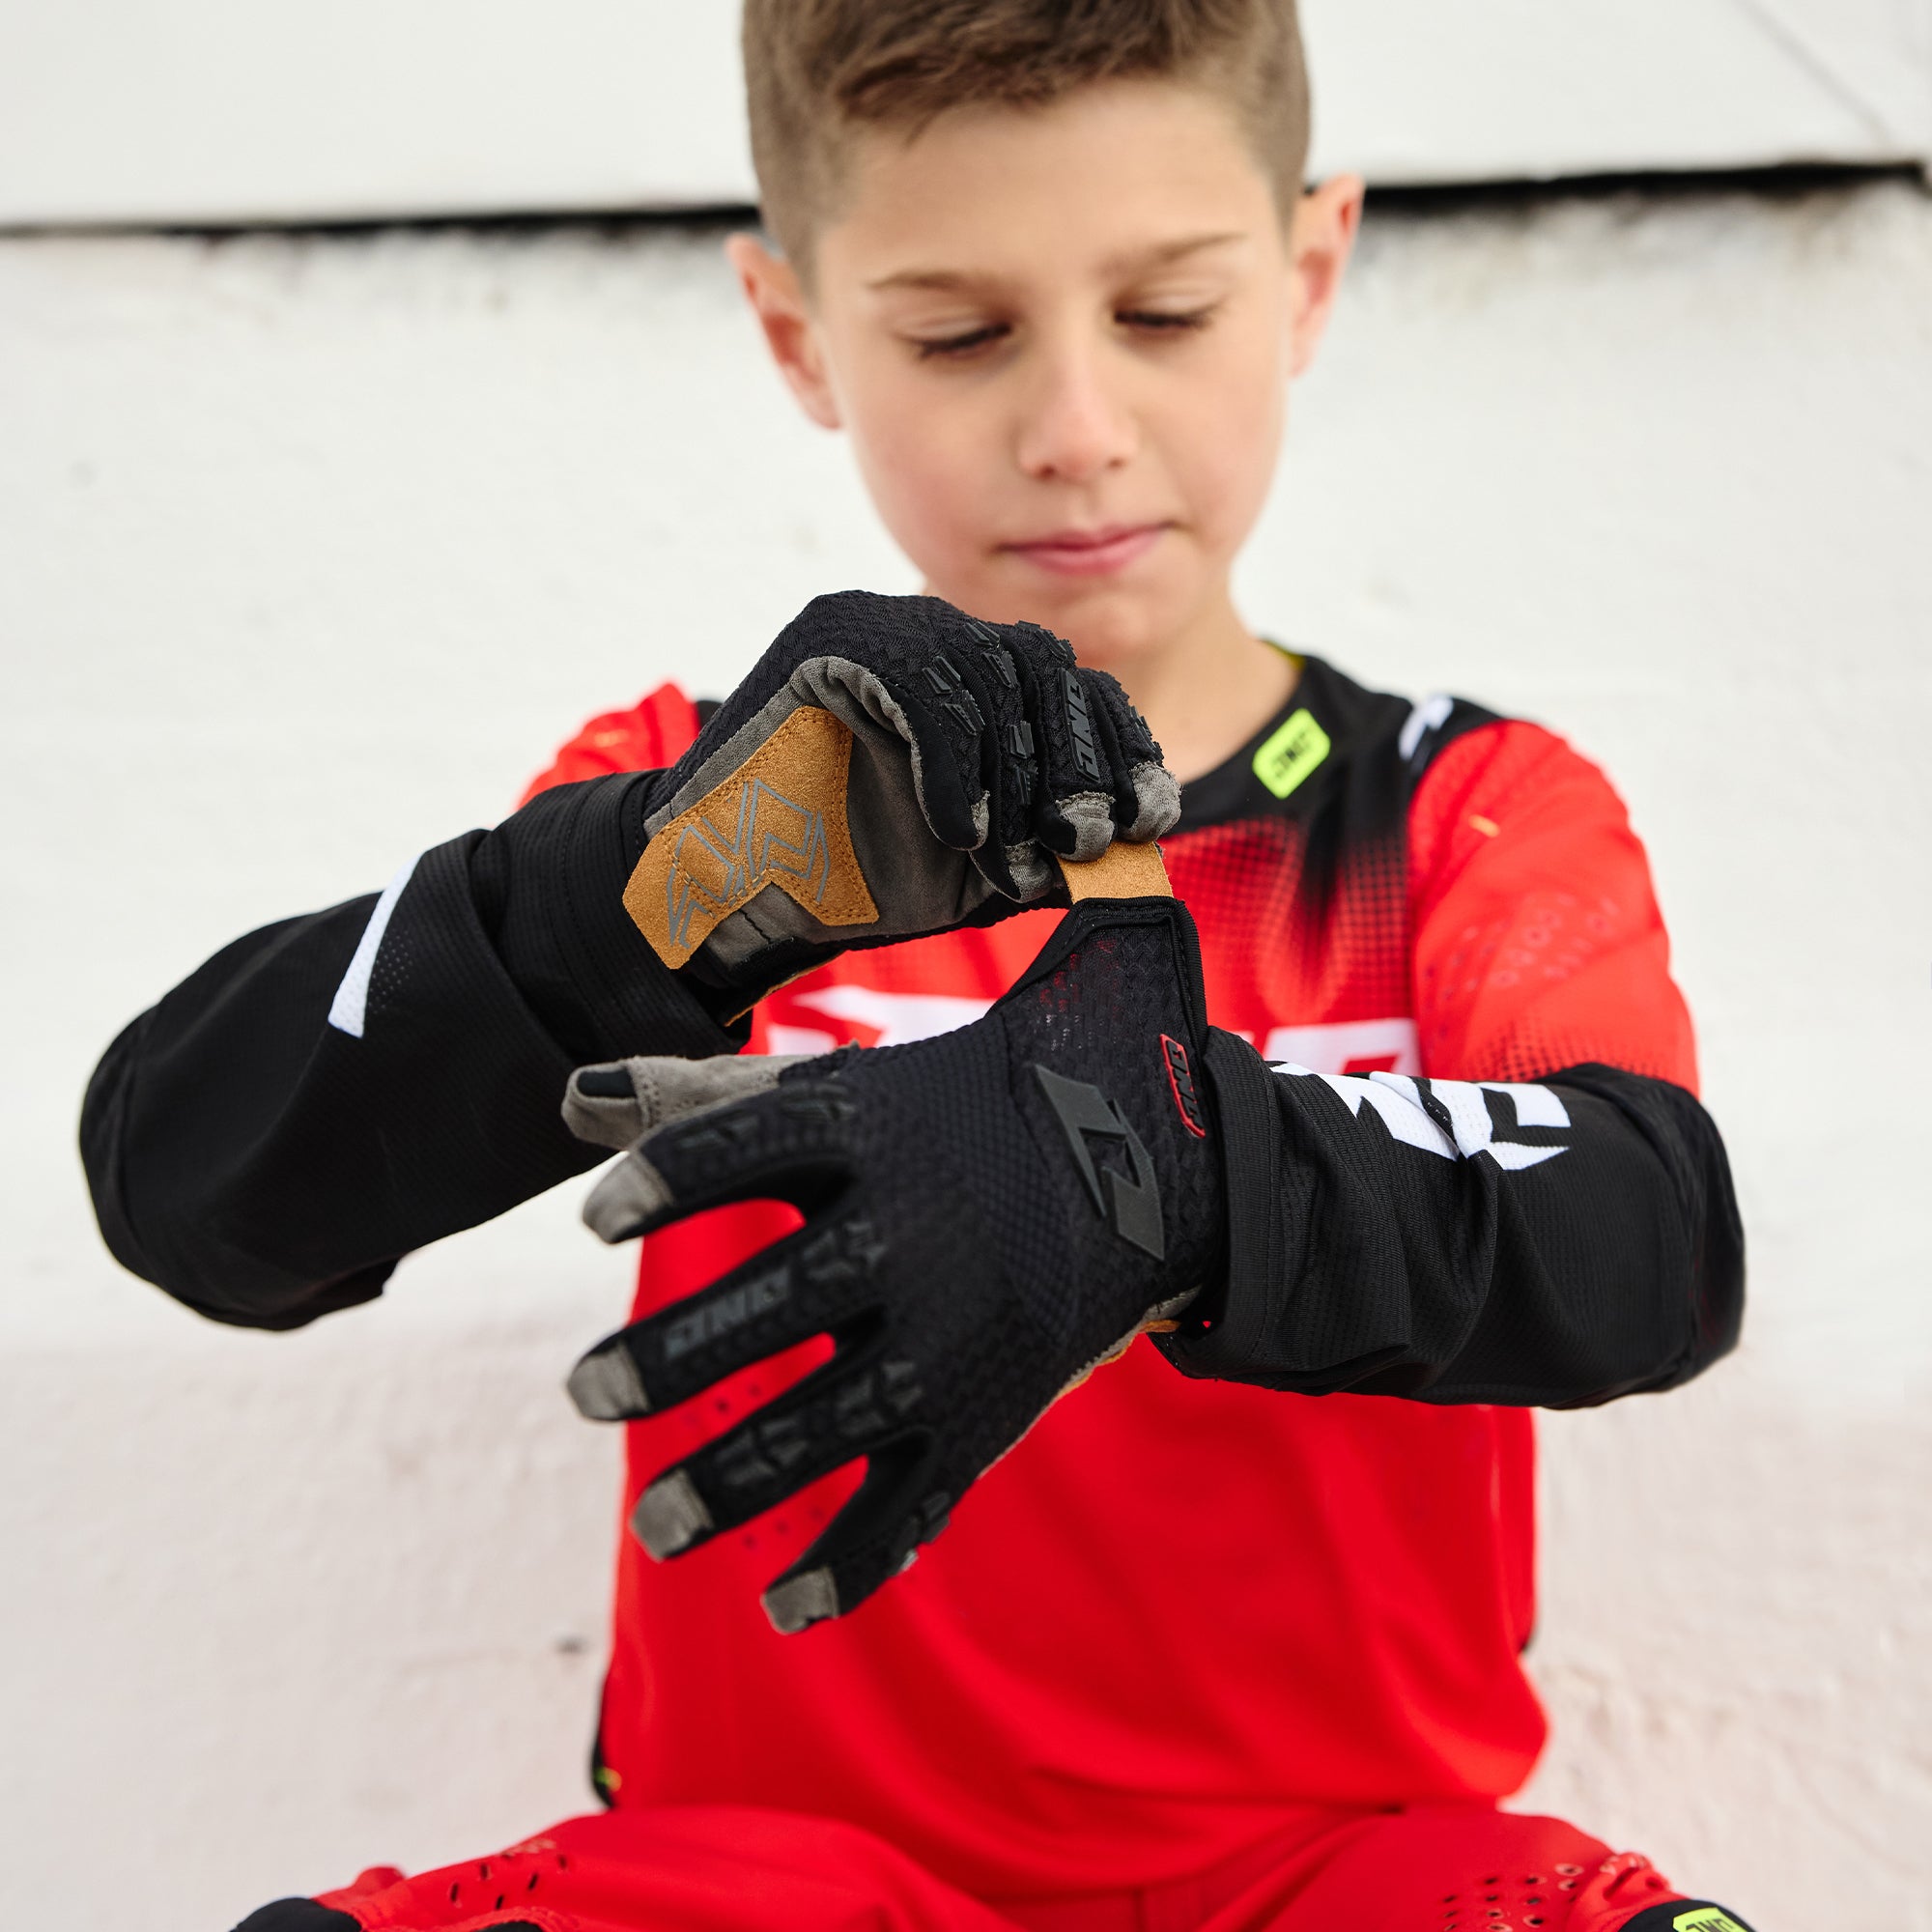 X-197 Youth Glove - CORE BLACK